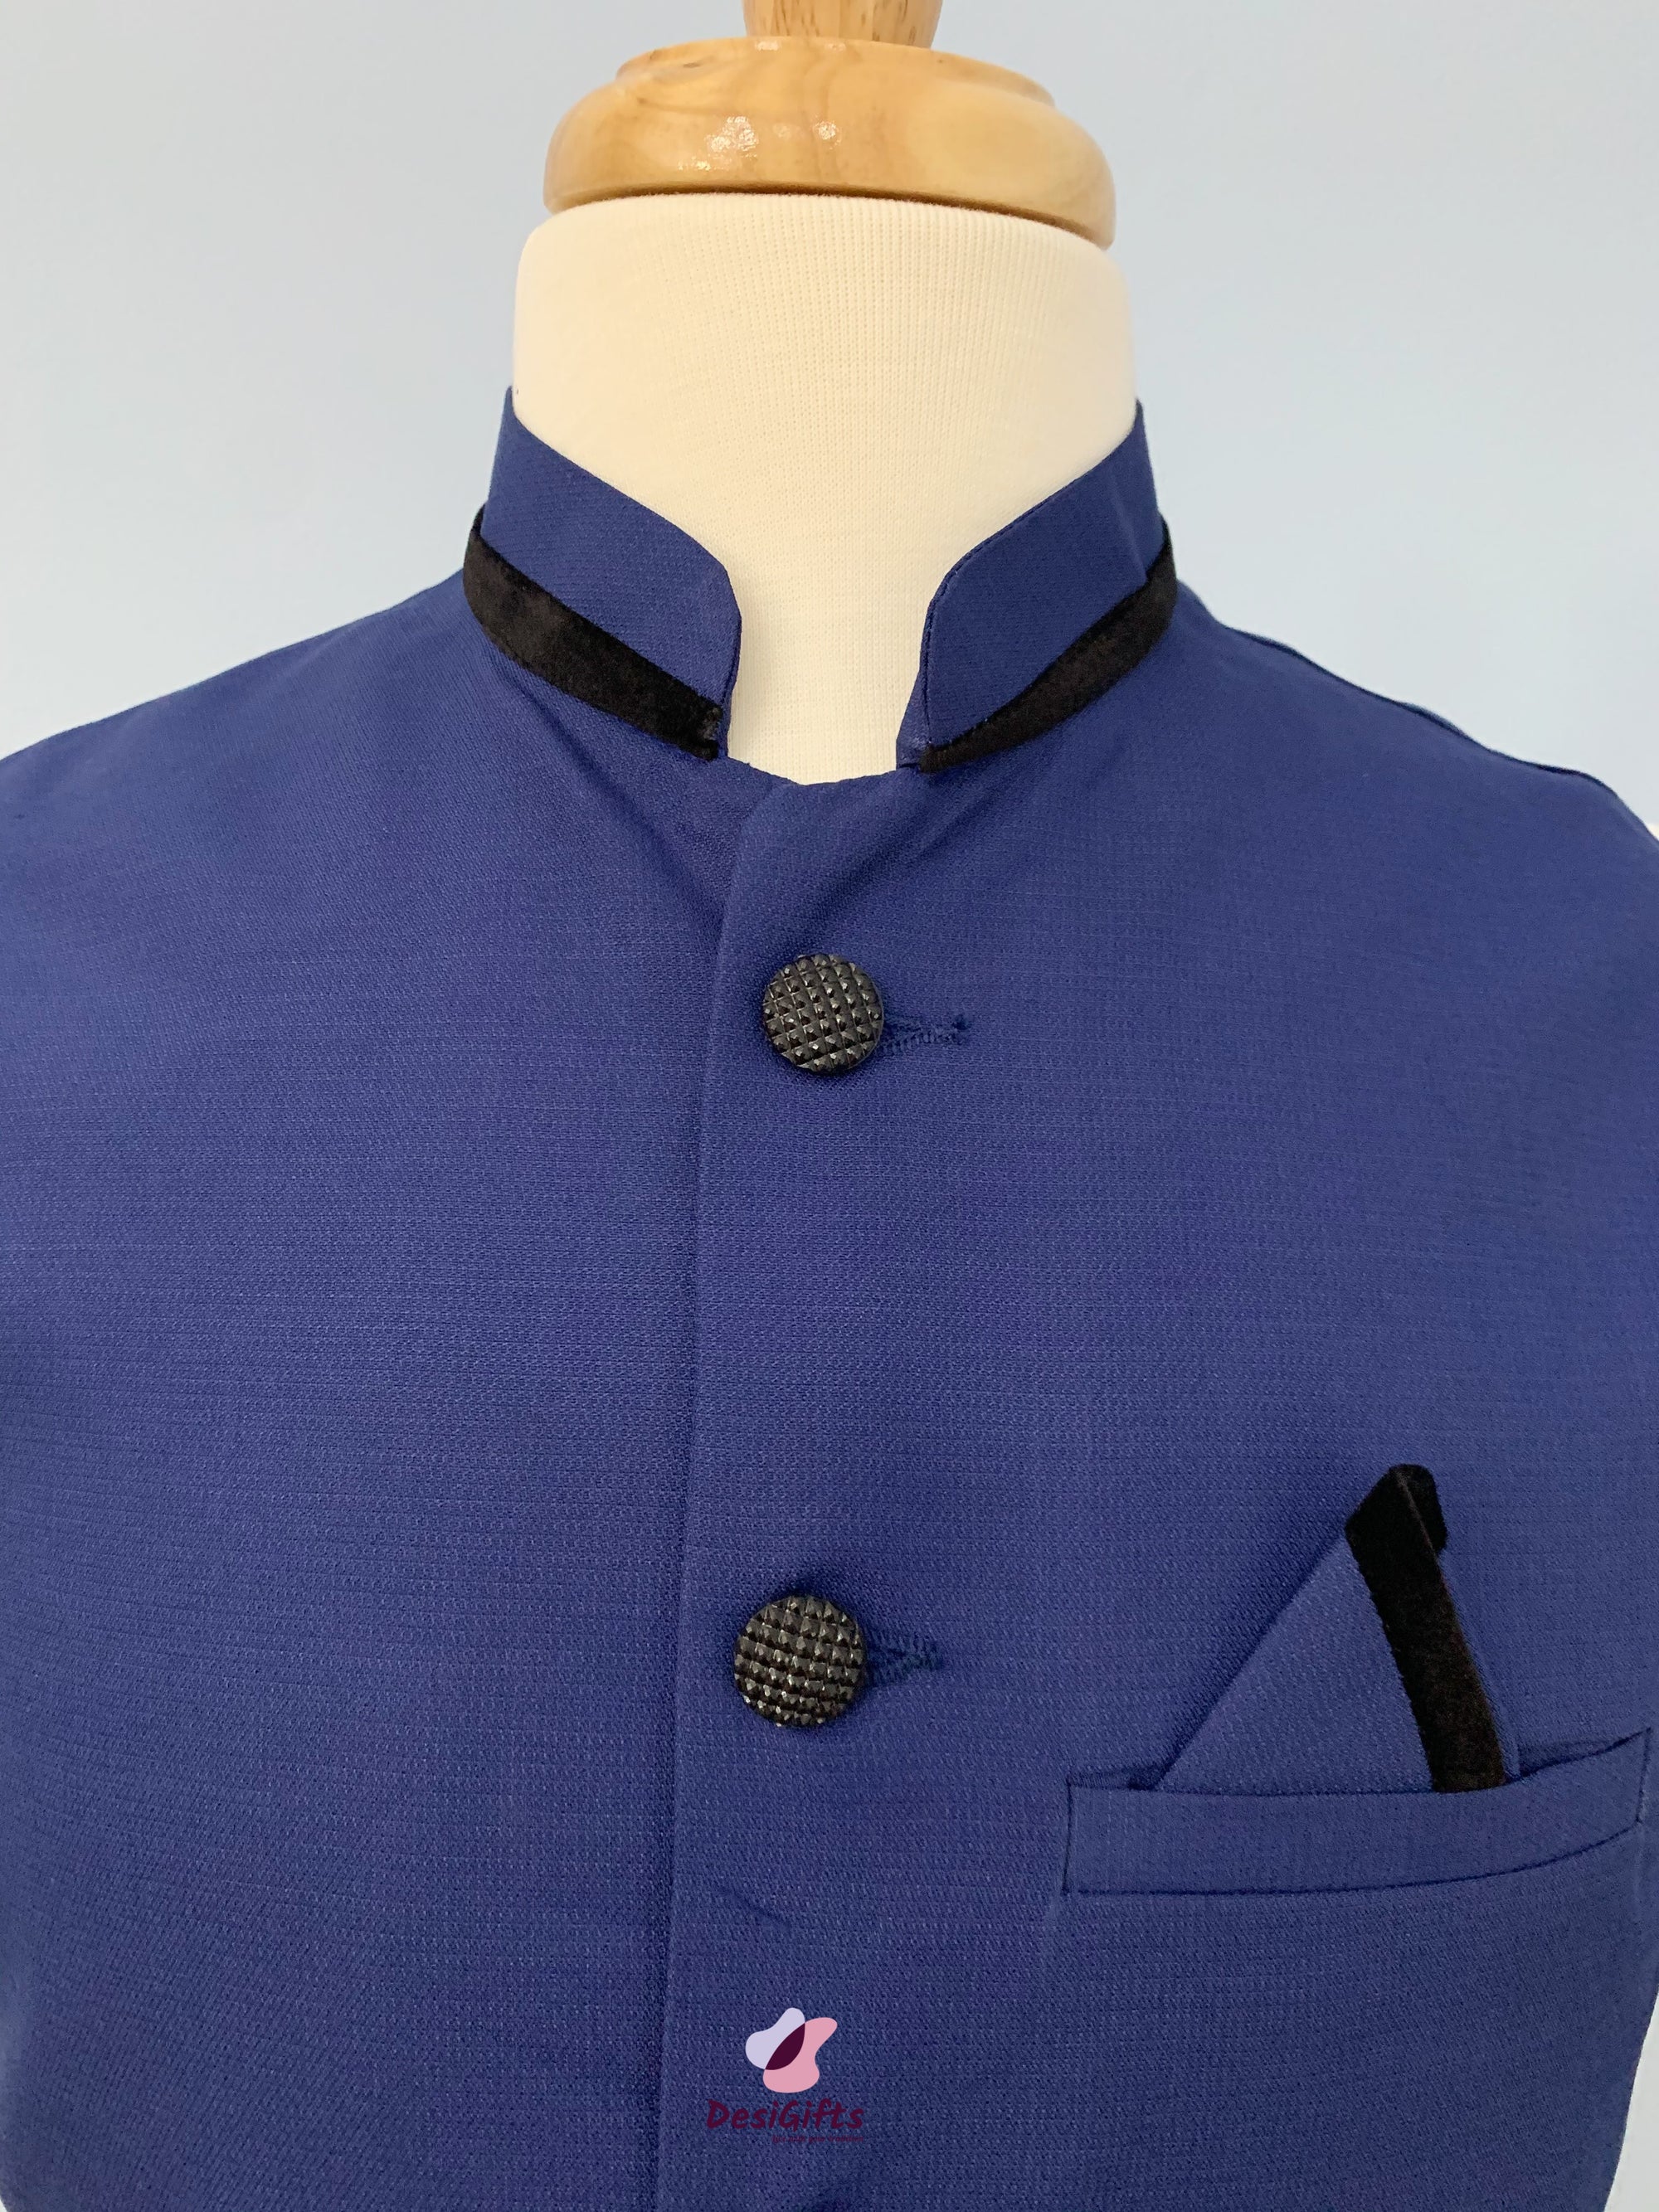 Woven Jute Cotton Nehru Style Jacket-Design, MJ#LBL 365